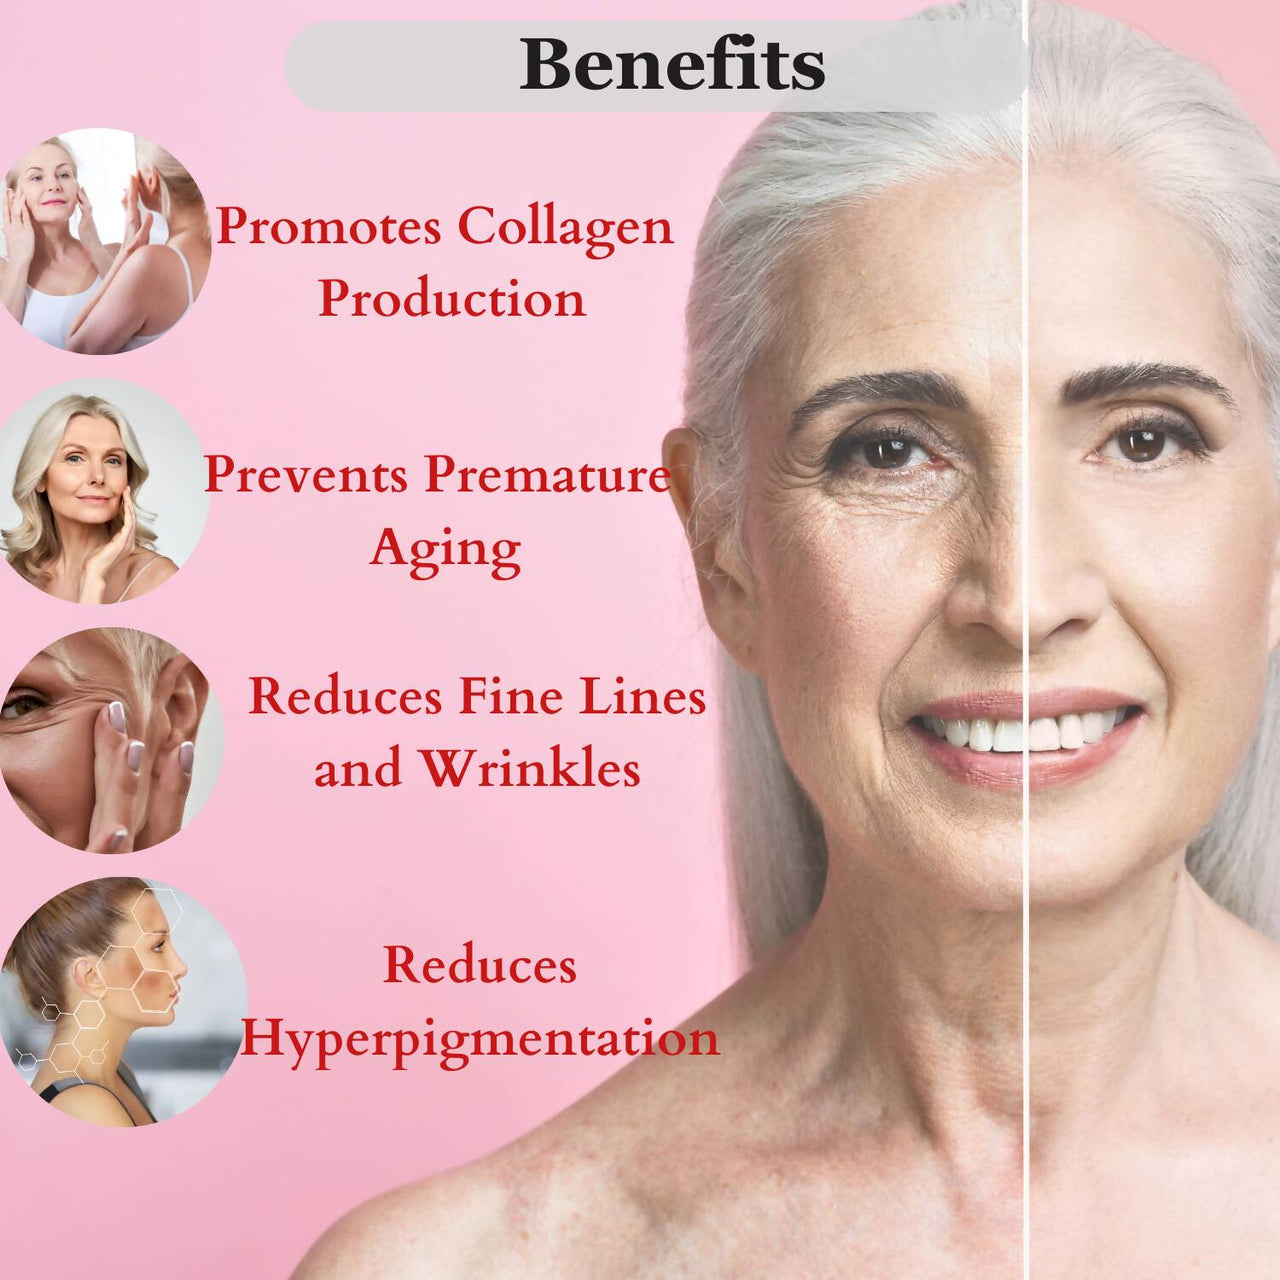 Dermistry Anti Aging Instant Intense Face Lift Serum & Instant Intense Face Mask - Distacart